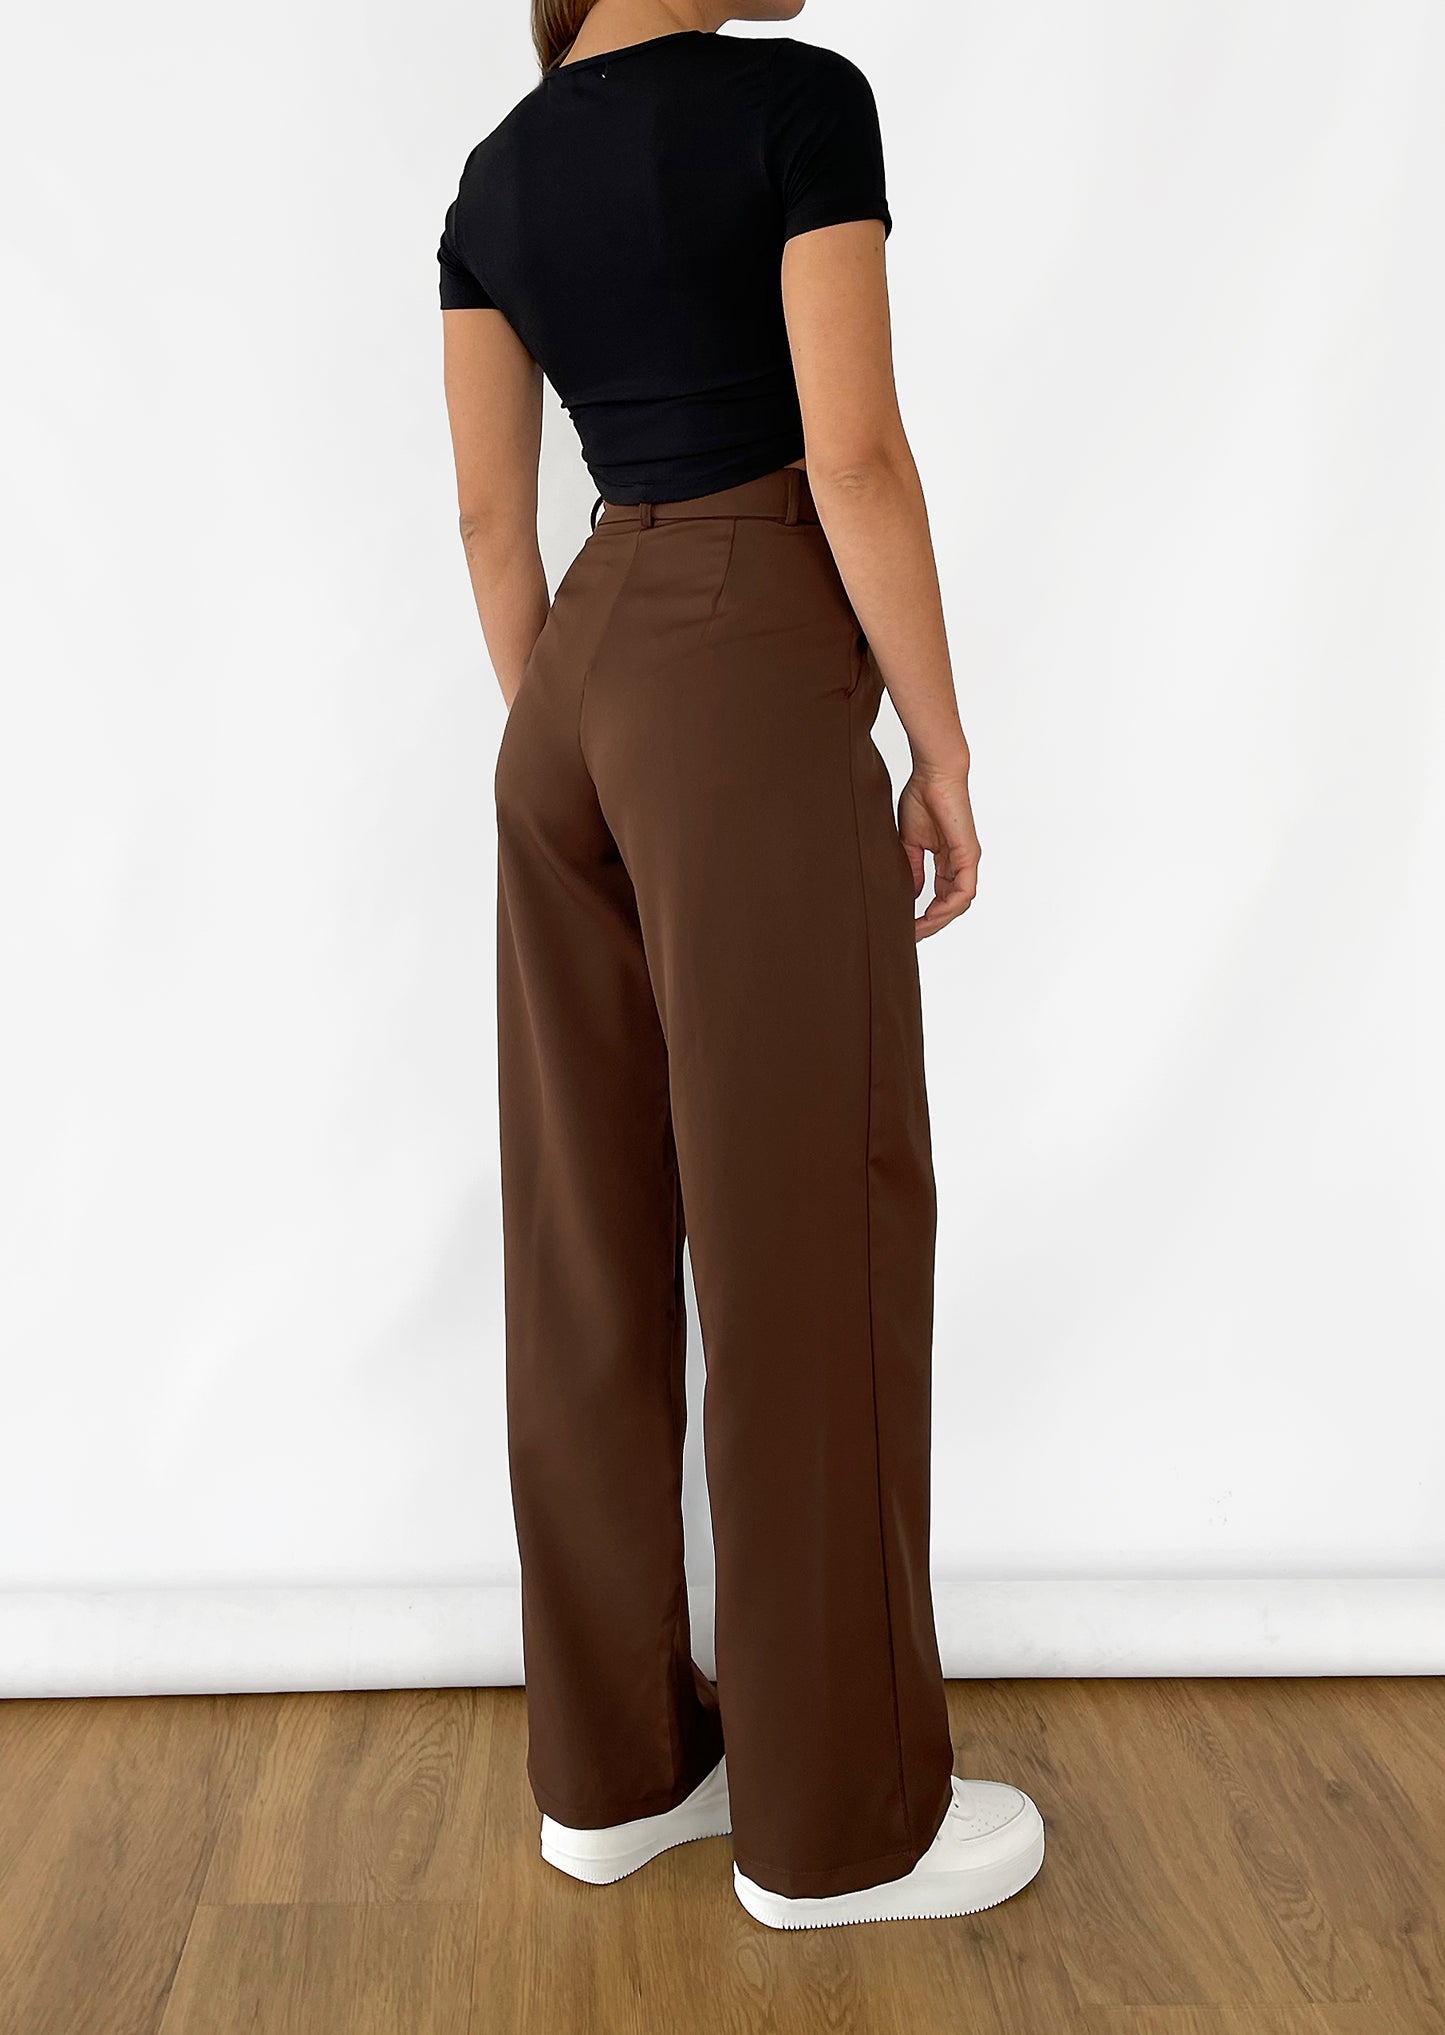 Pantalon large marron